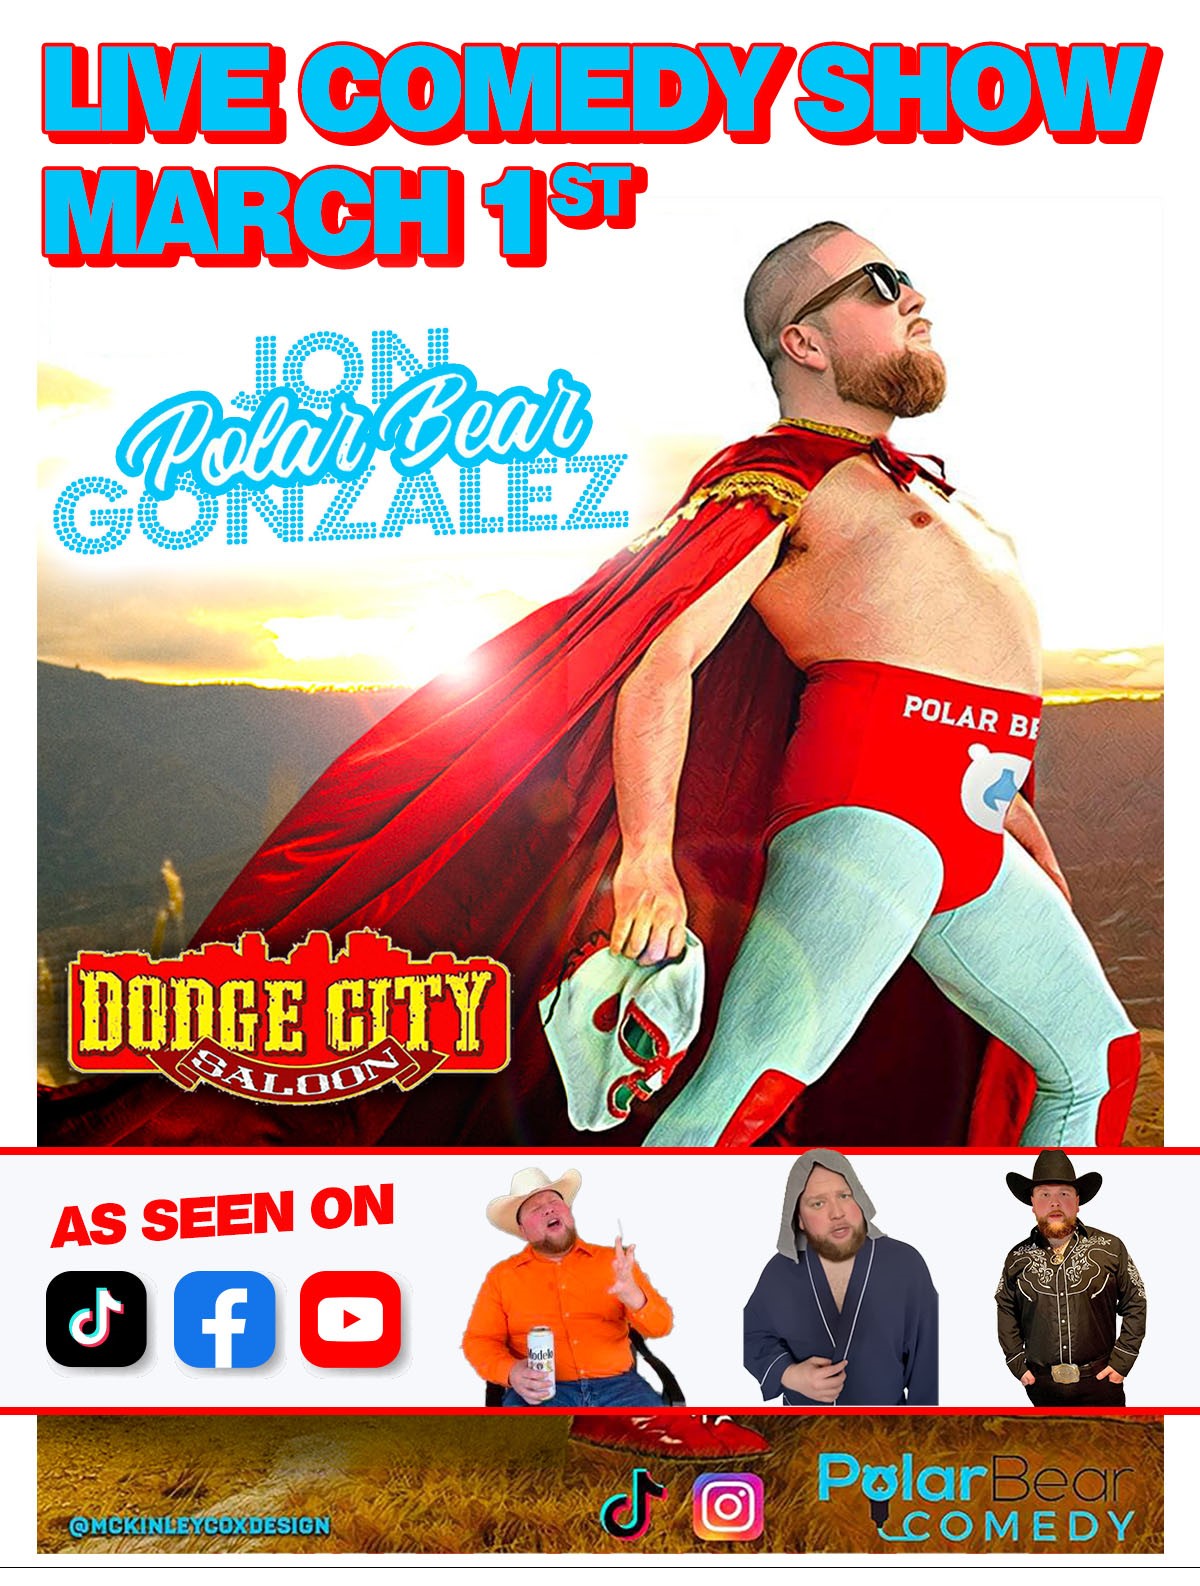 Live Comedy w / Jon POLAR BEAR Gonzalez  on Mar 01, 20:00@Dodge City Saloon - Buy tickets and Get information on LOLTICKETS COM loltickets.com